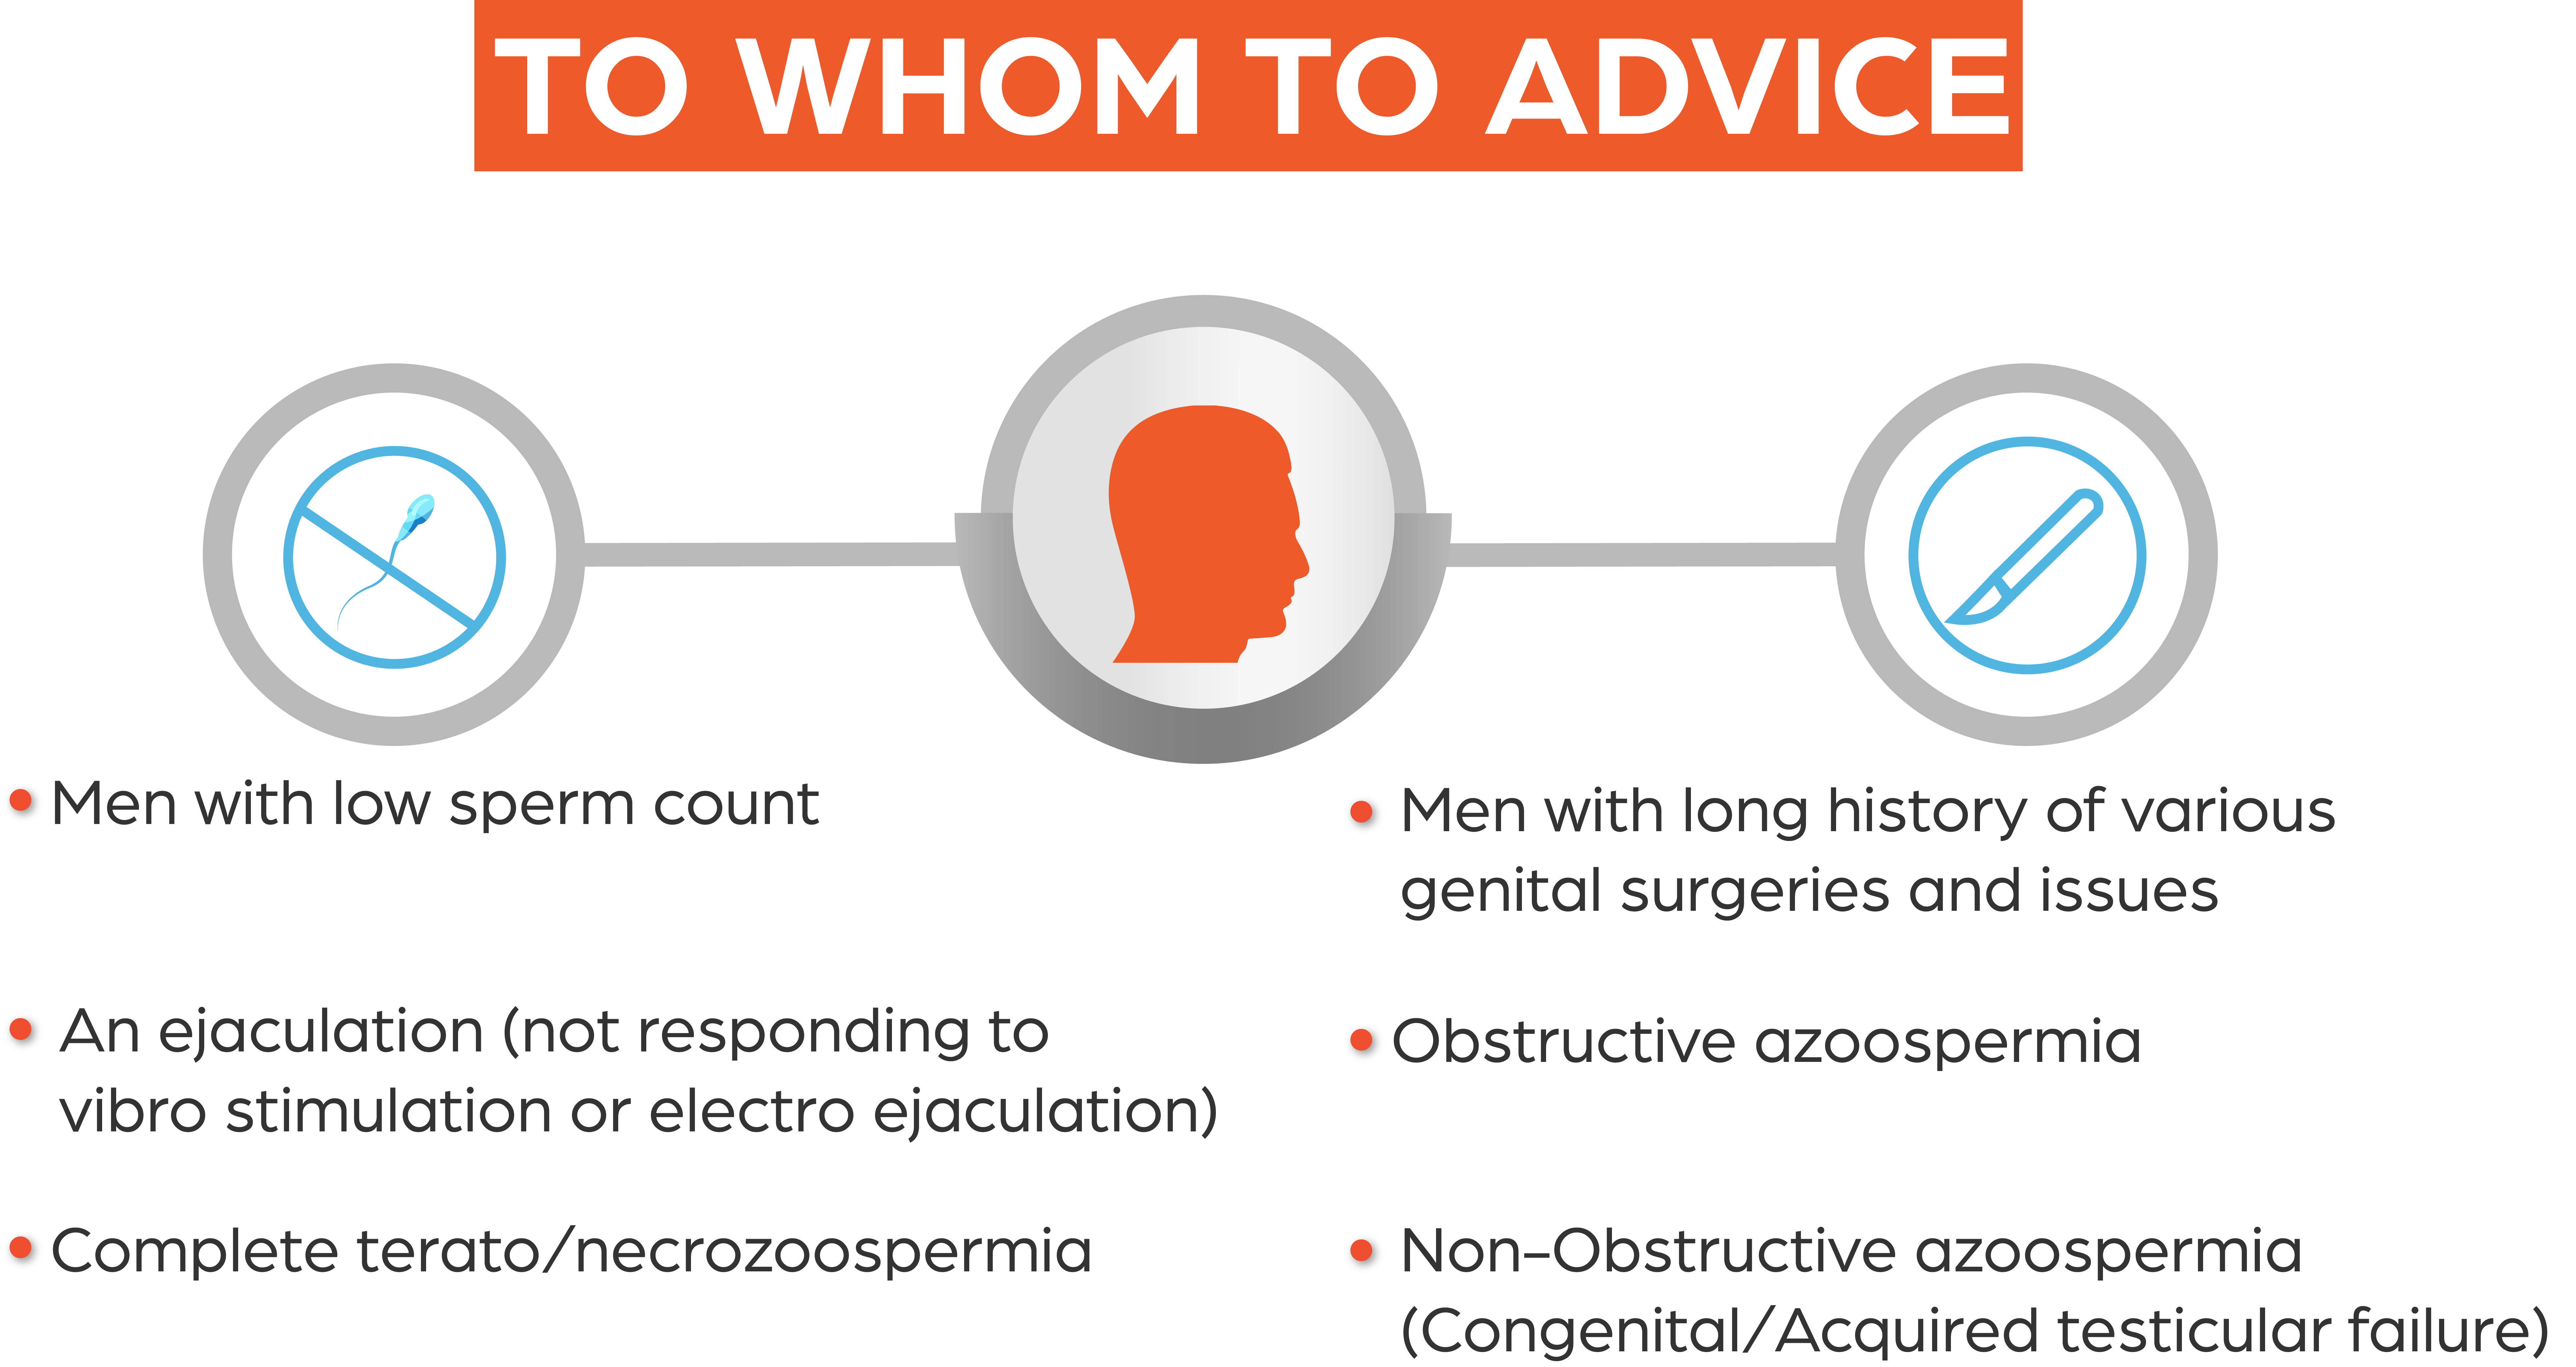 TESA - To Whom To Advice